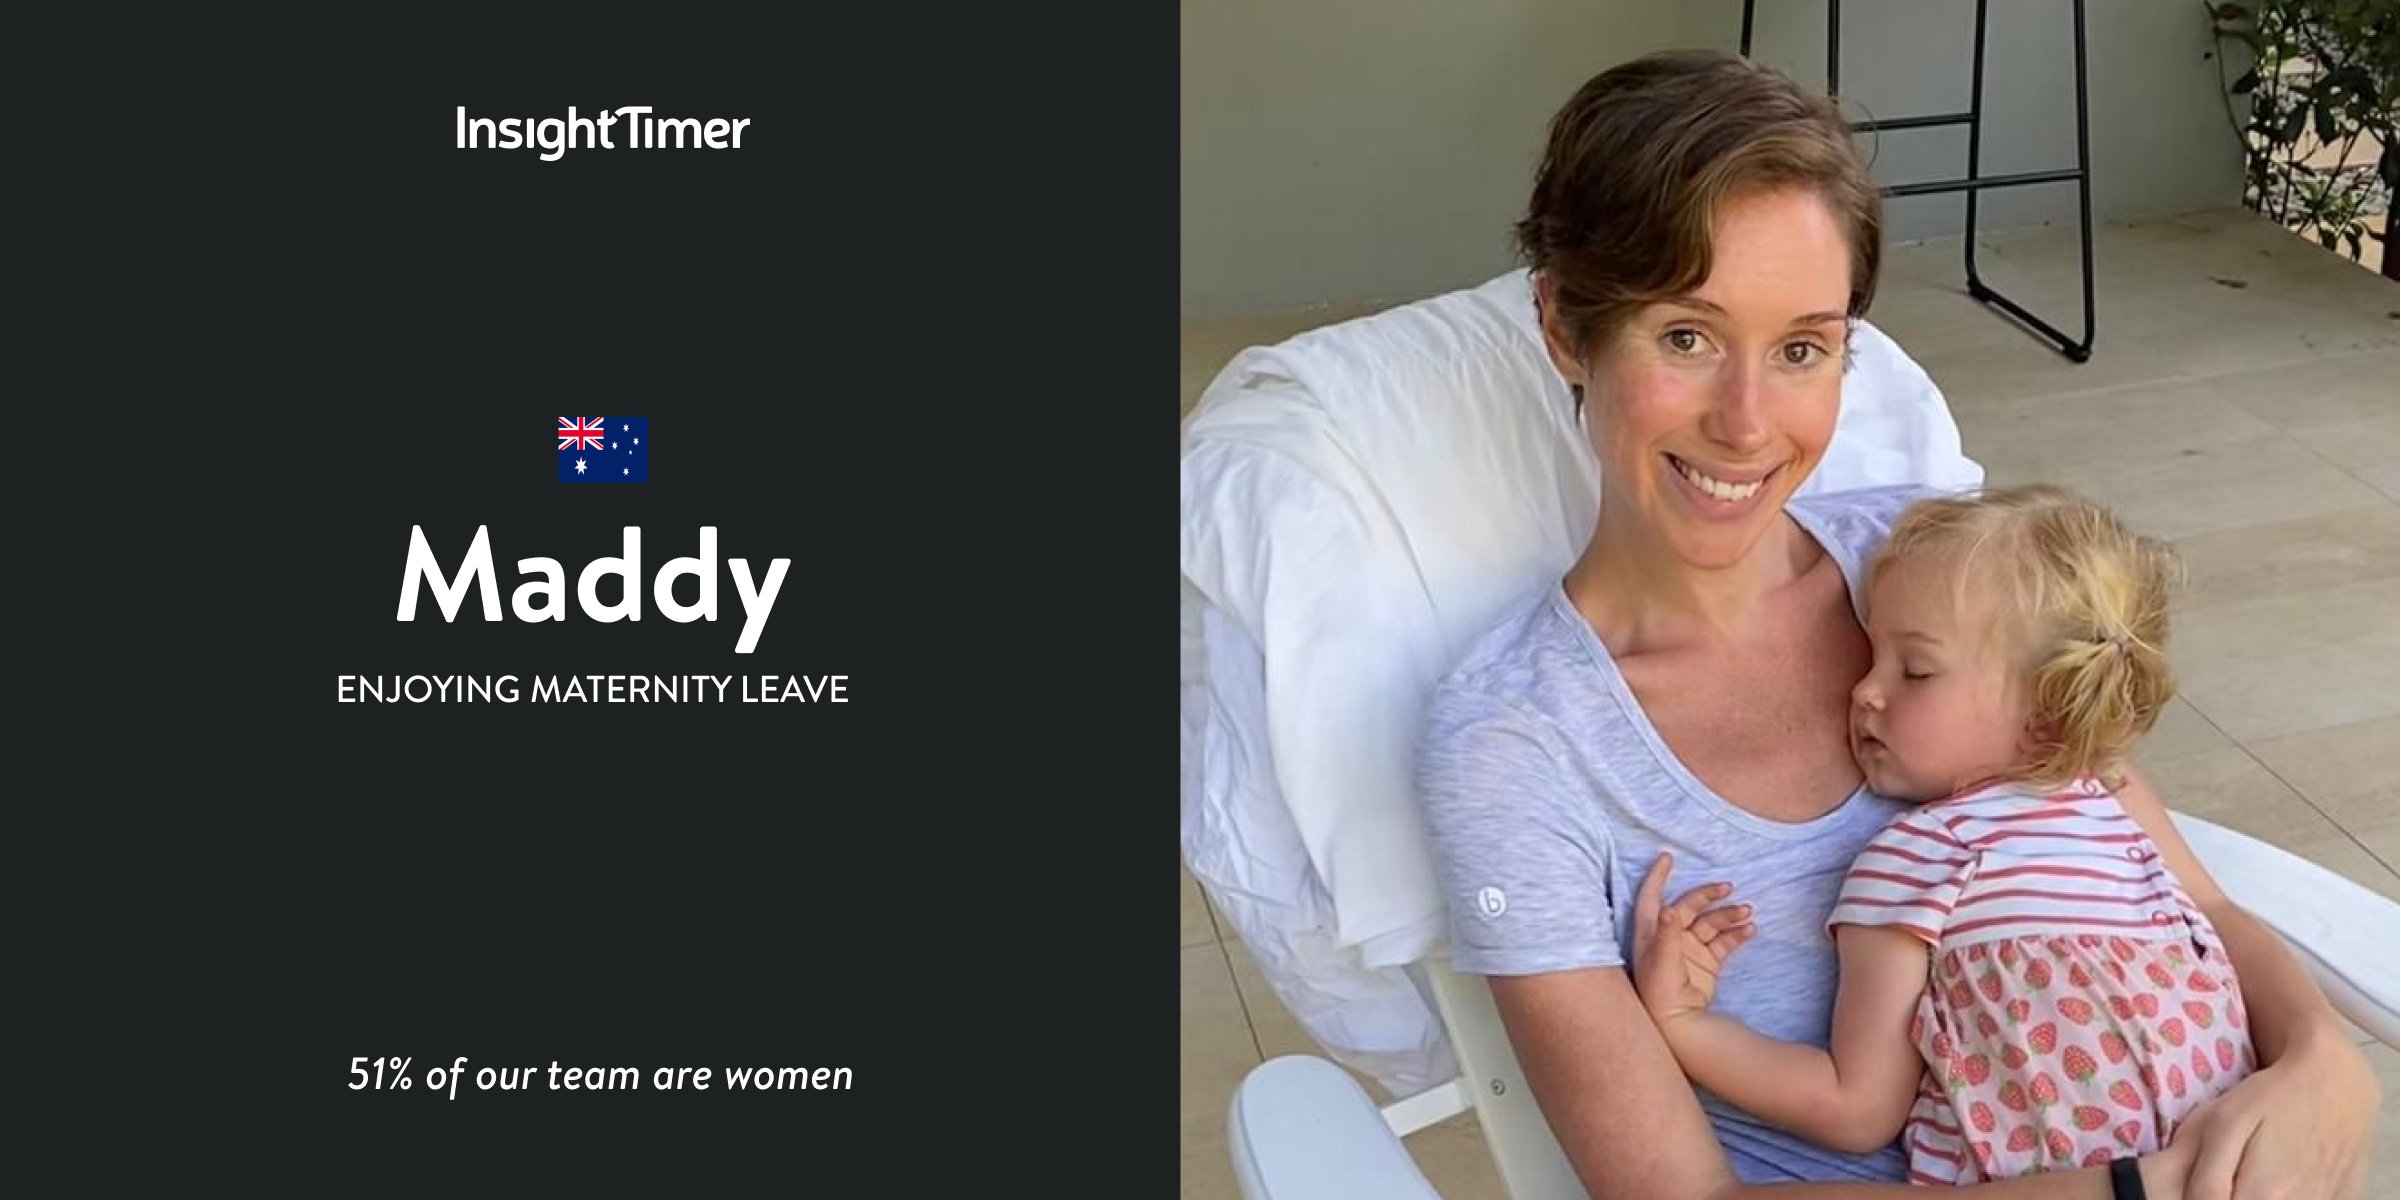 Meet Maddy – Enjoying Maternity Leave